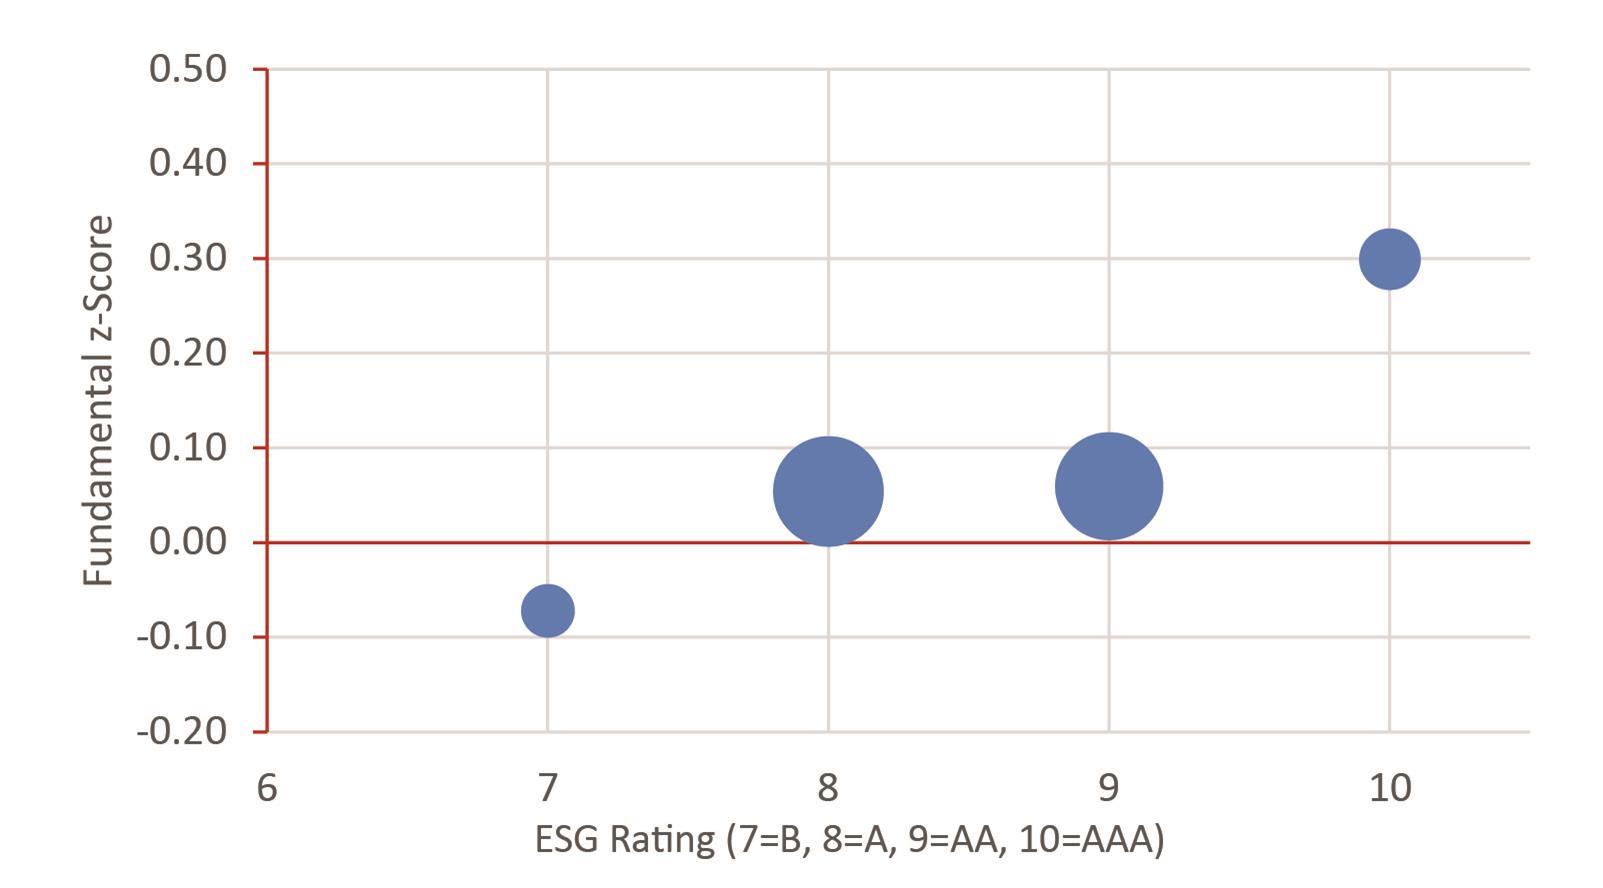 Chart 4: ClearBridge ESG ratings vs standardised profitability scores